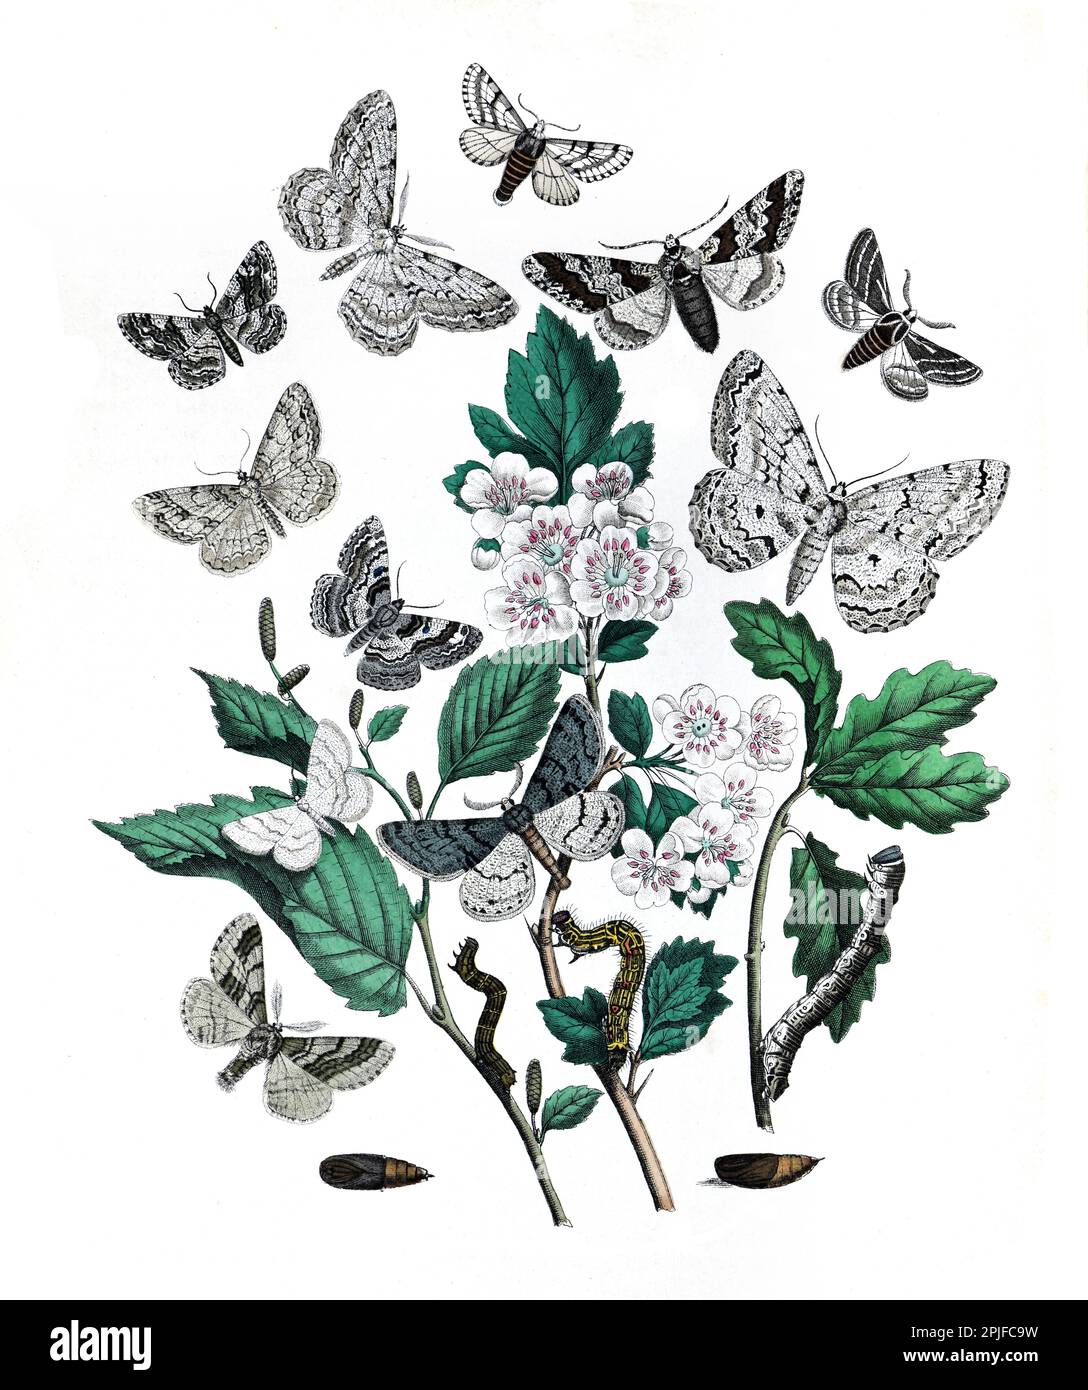 Lepidoptera Illustration. Schmetterlings-Poster. Schmetterlinge mit klassischem Textilmuster. Schmetterlinge mit altem Muster. Botanische Schmetterlinge. Vintage-Schmetterlinge Stockfoto